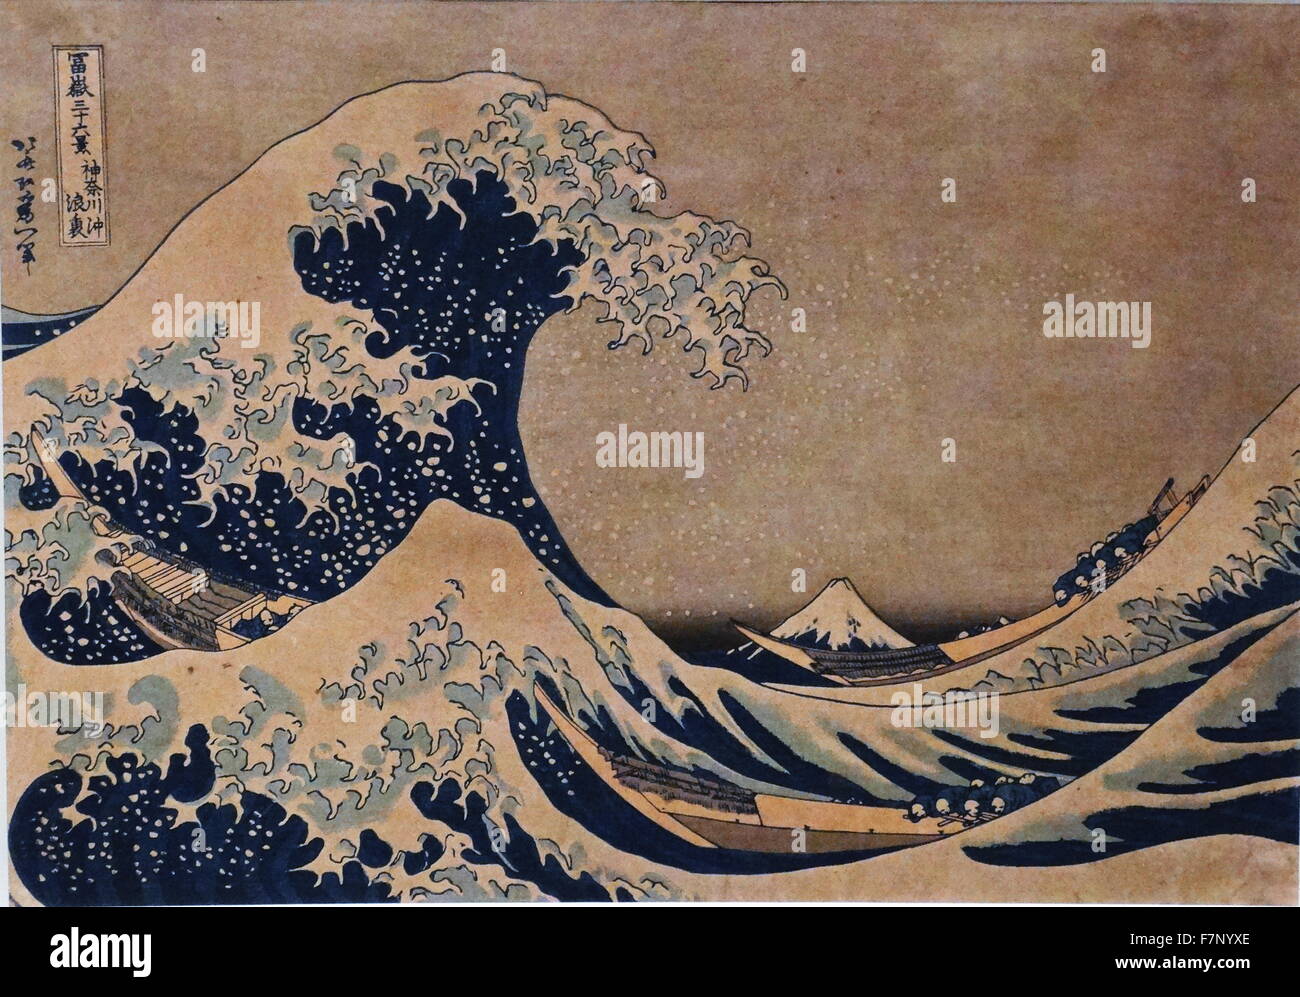 Lettura di un'opera: La grande onda di Kanagawa di Hokusai